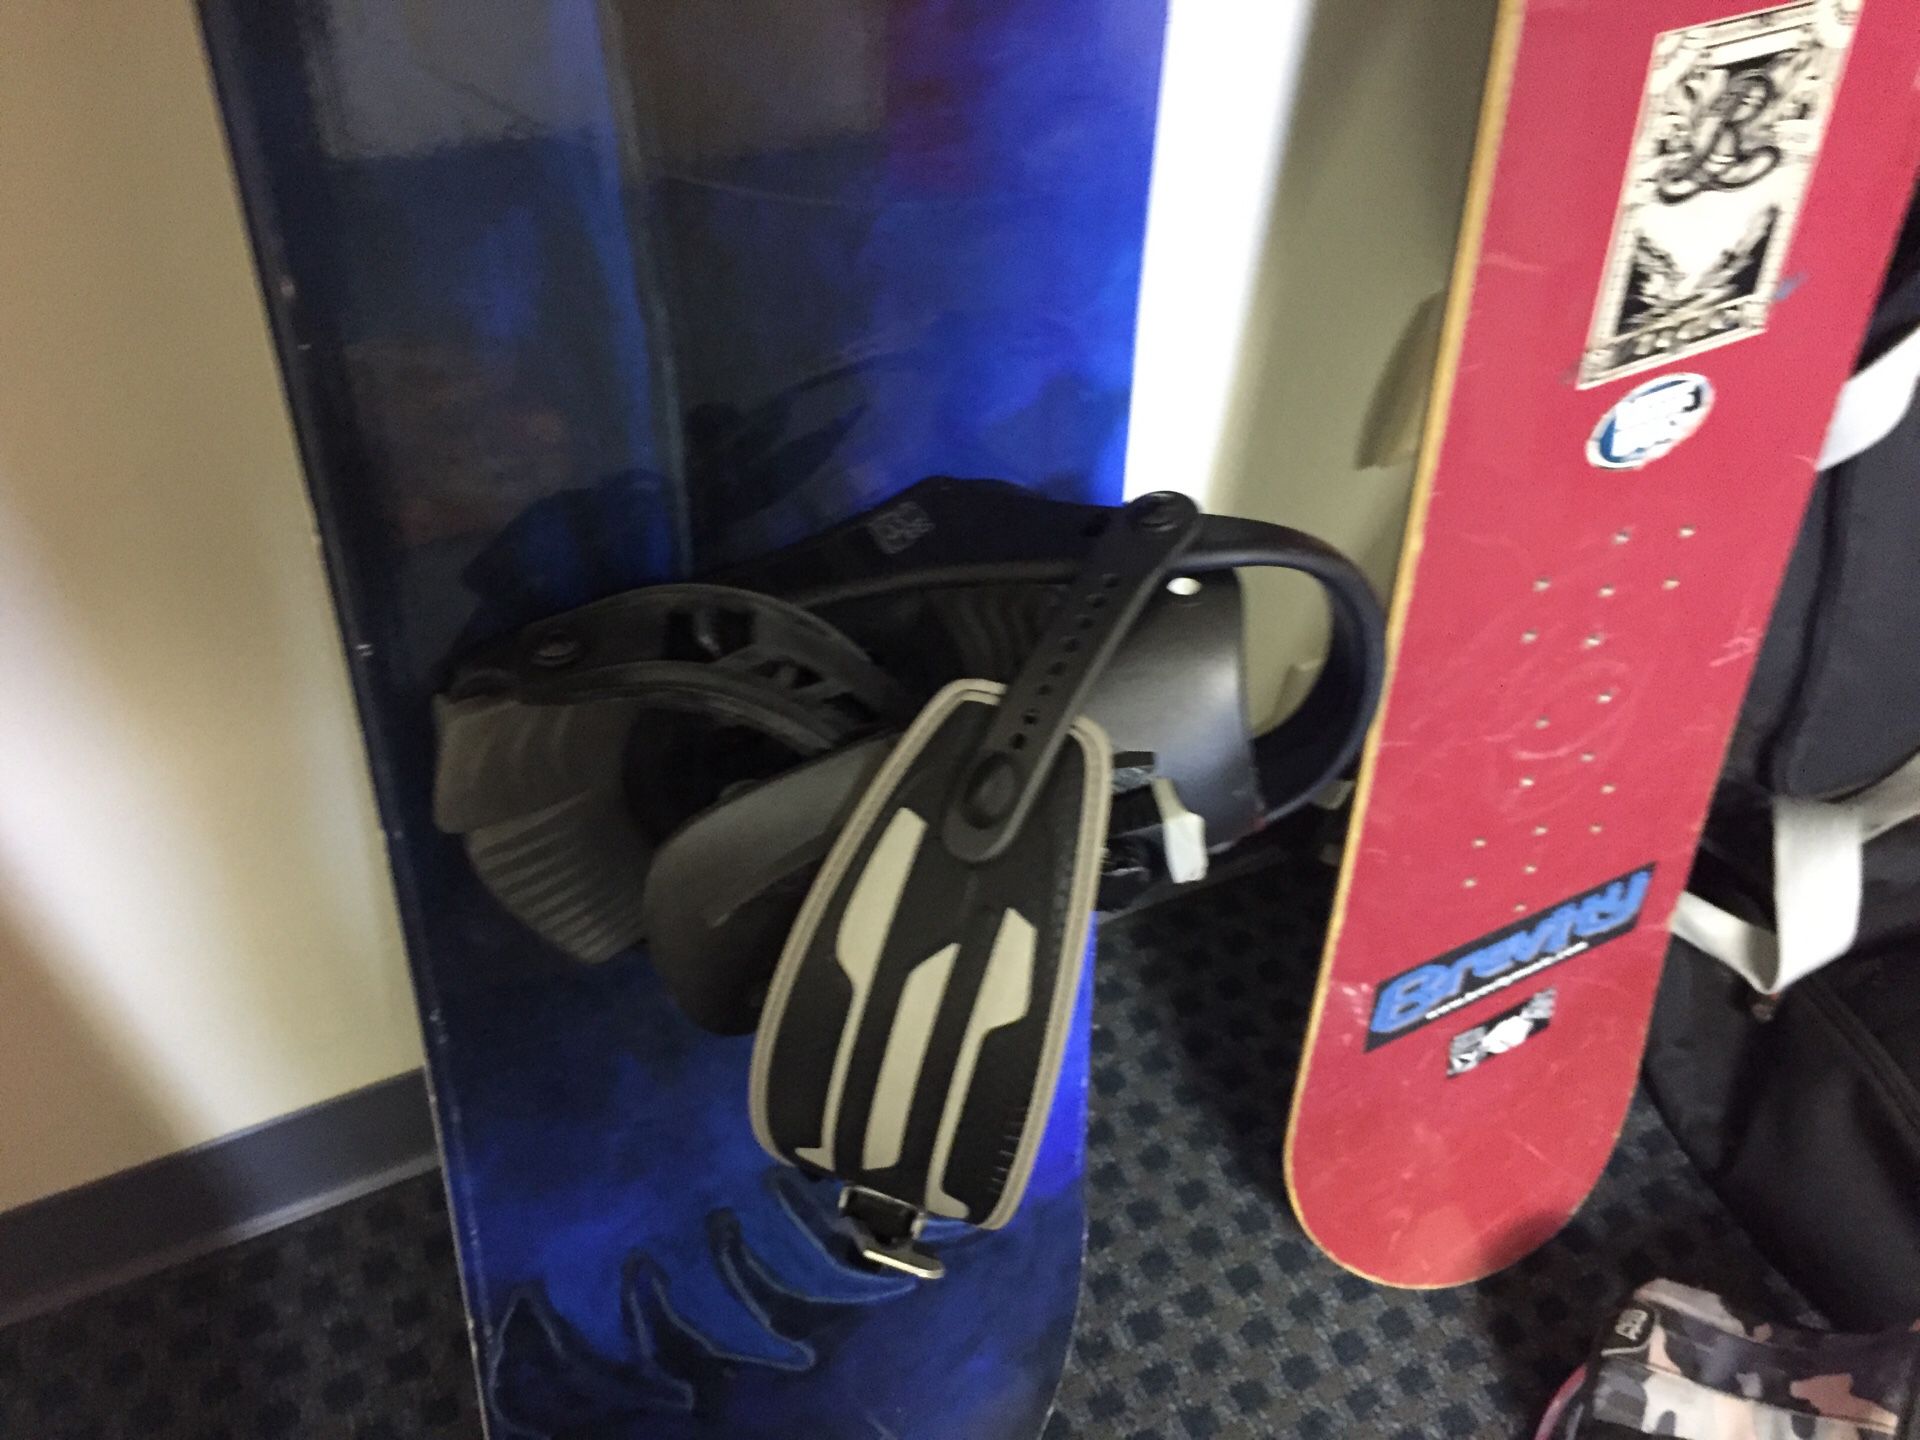 Snowboards bindings and bag